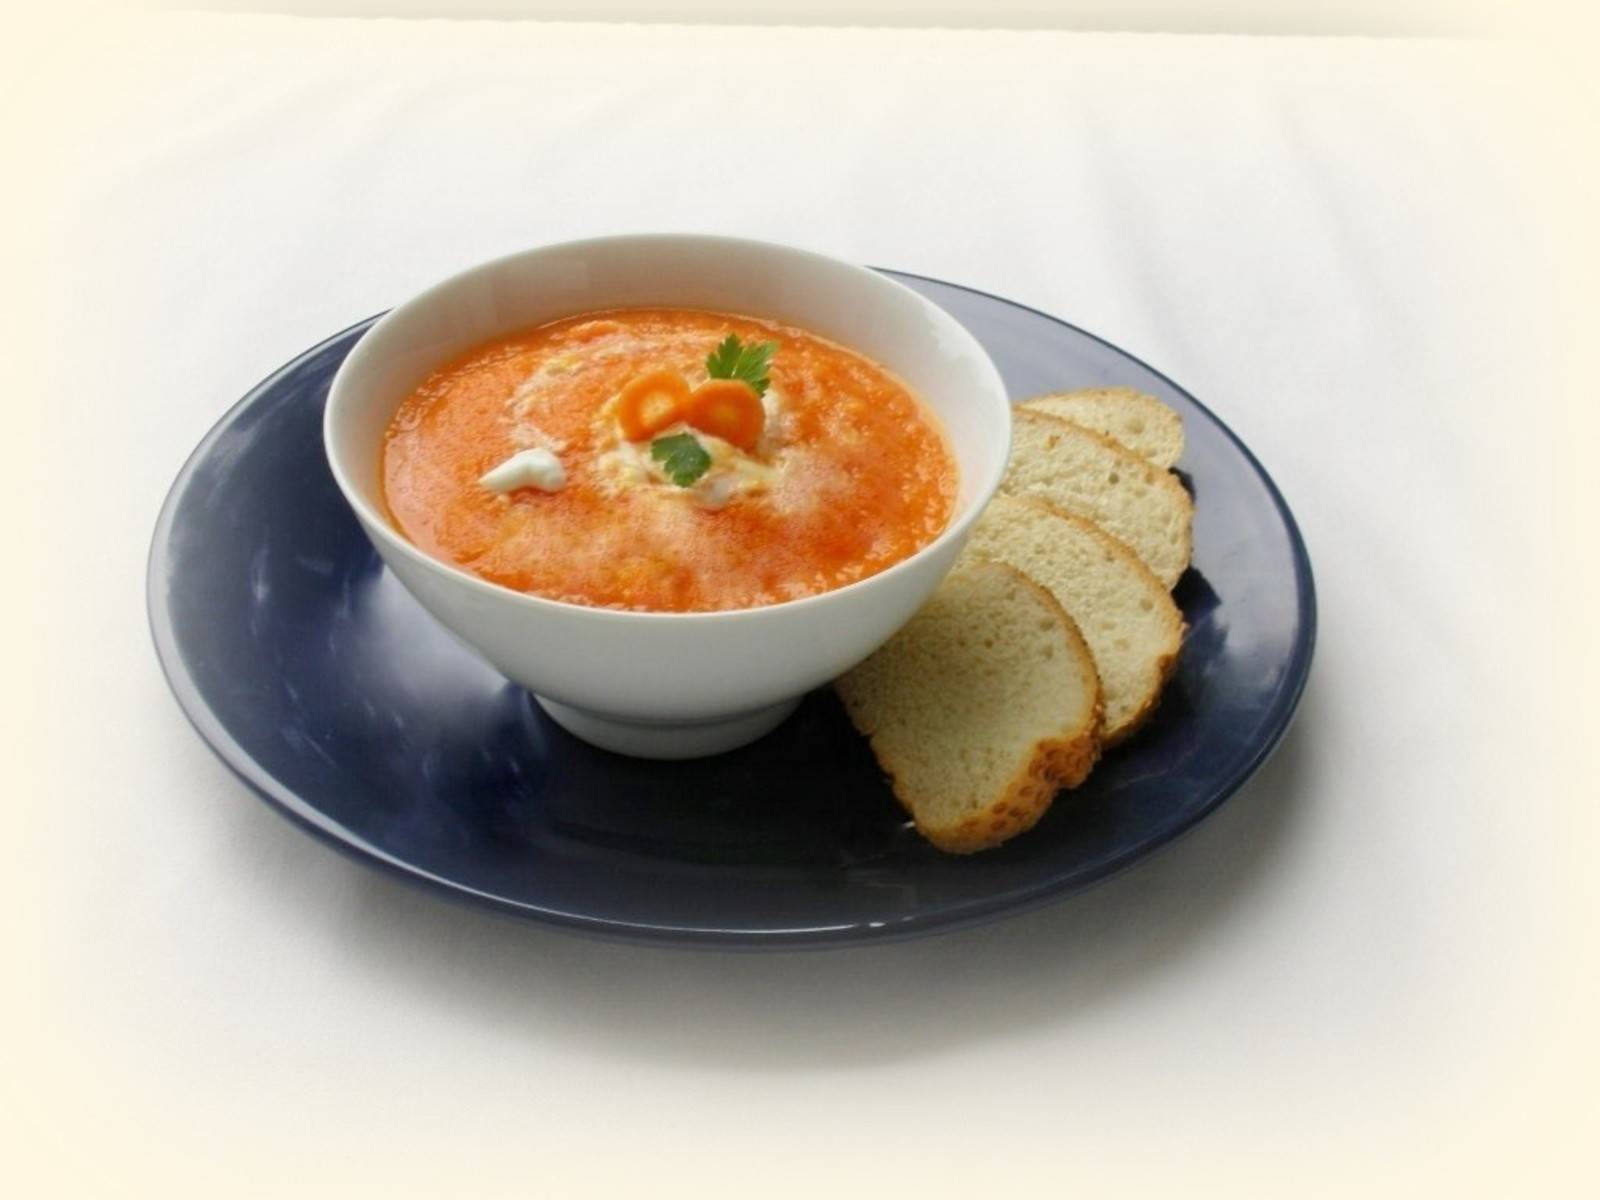 Karotten-Samt Suppe